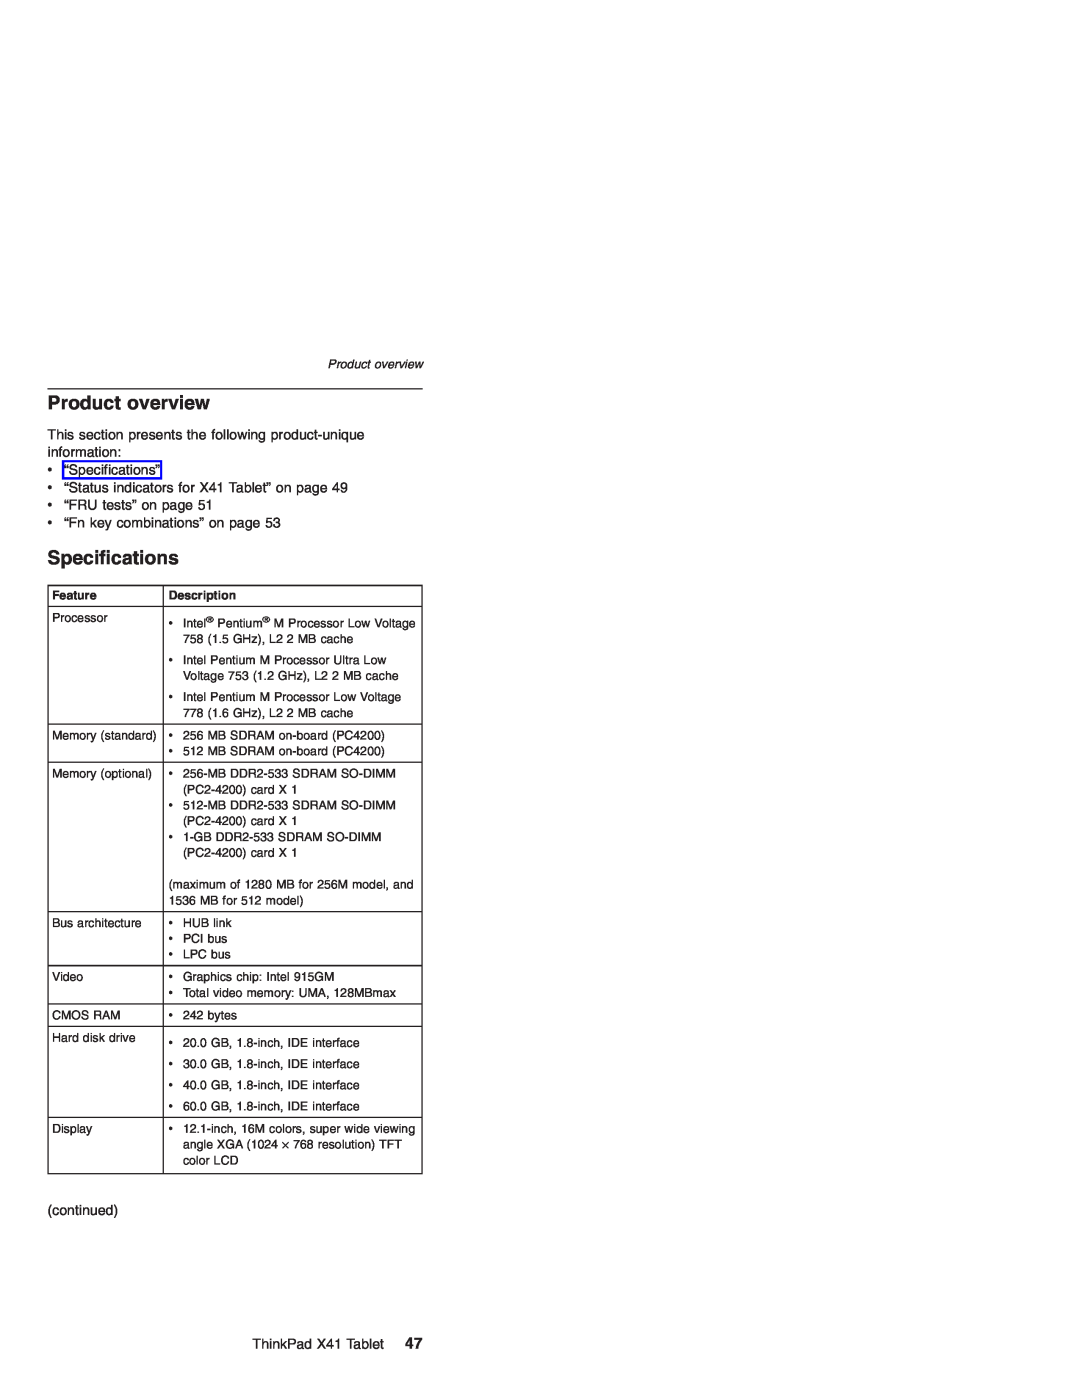 Lenovo MT 1869 Product overview, v“Specifications”, v“Status indicators for X41 Tablet” on page, v“FRU tests” on page 